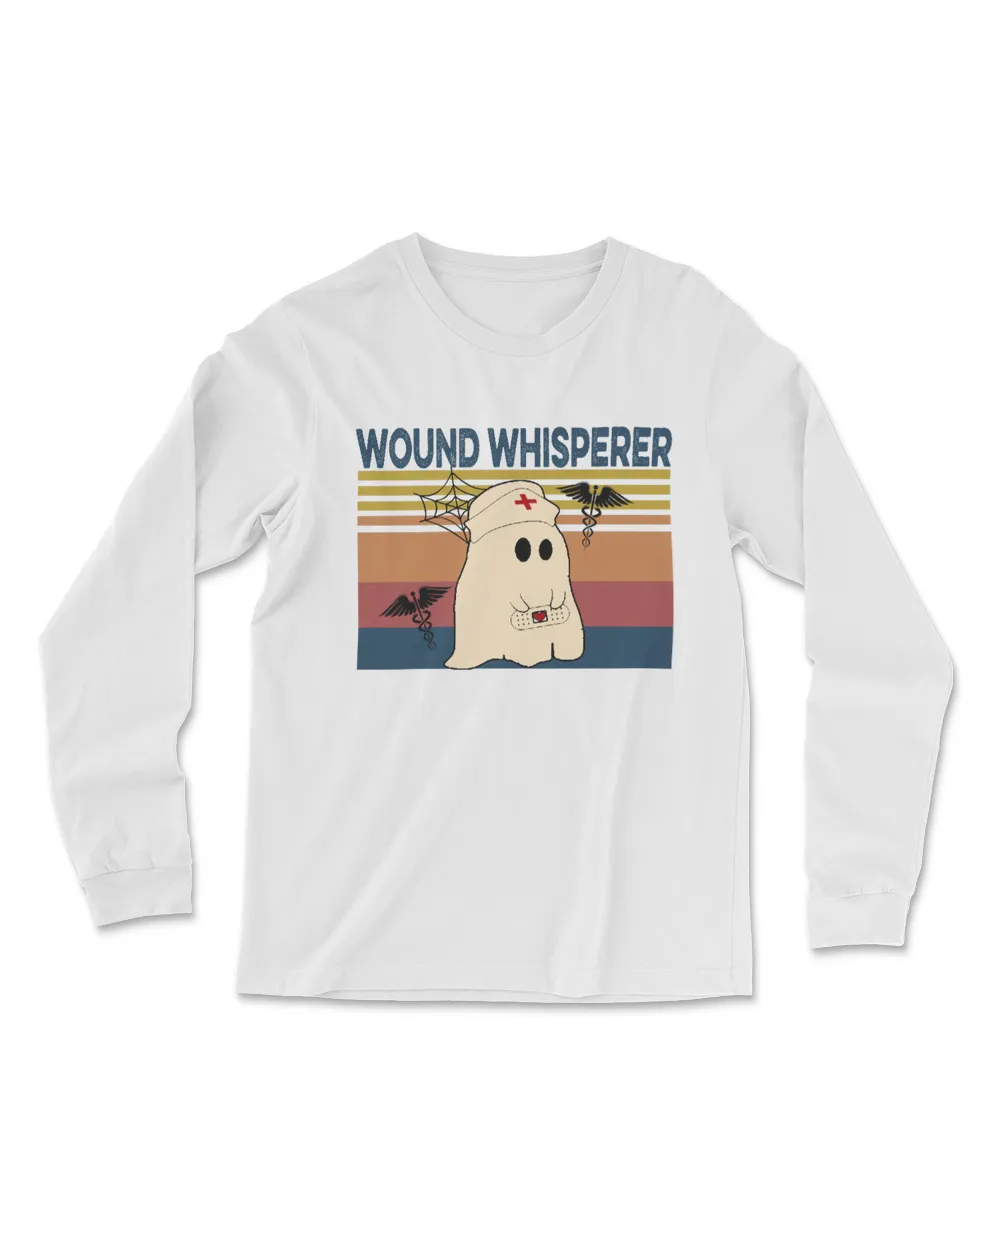 Nurse Ghost Wound Whisperer Vintage